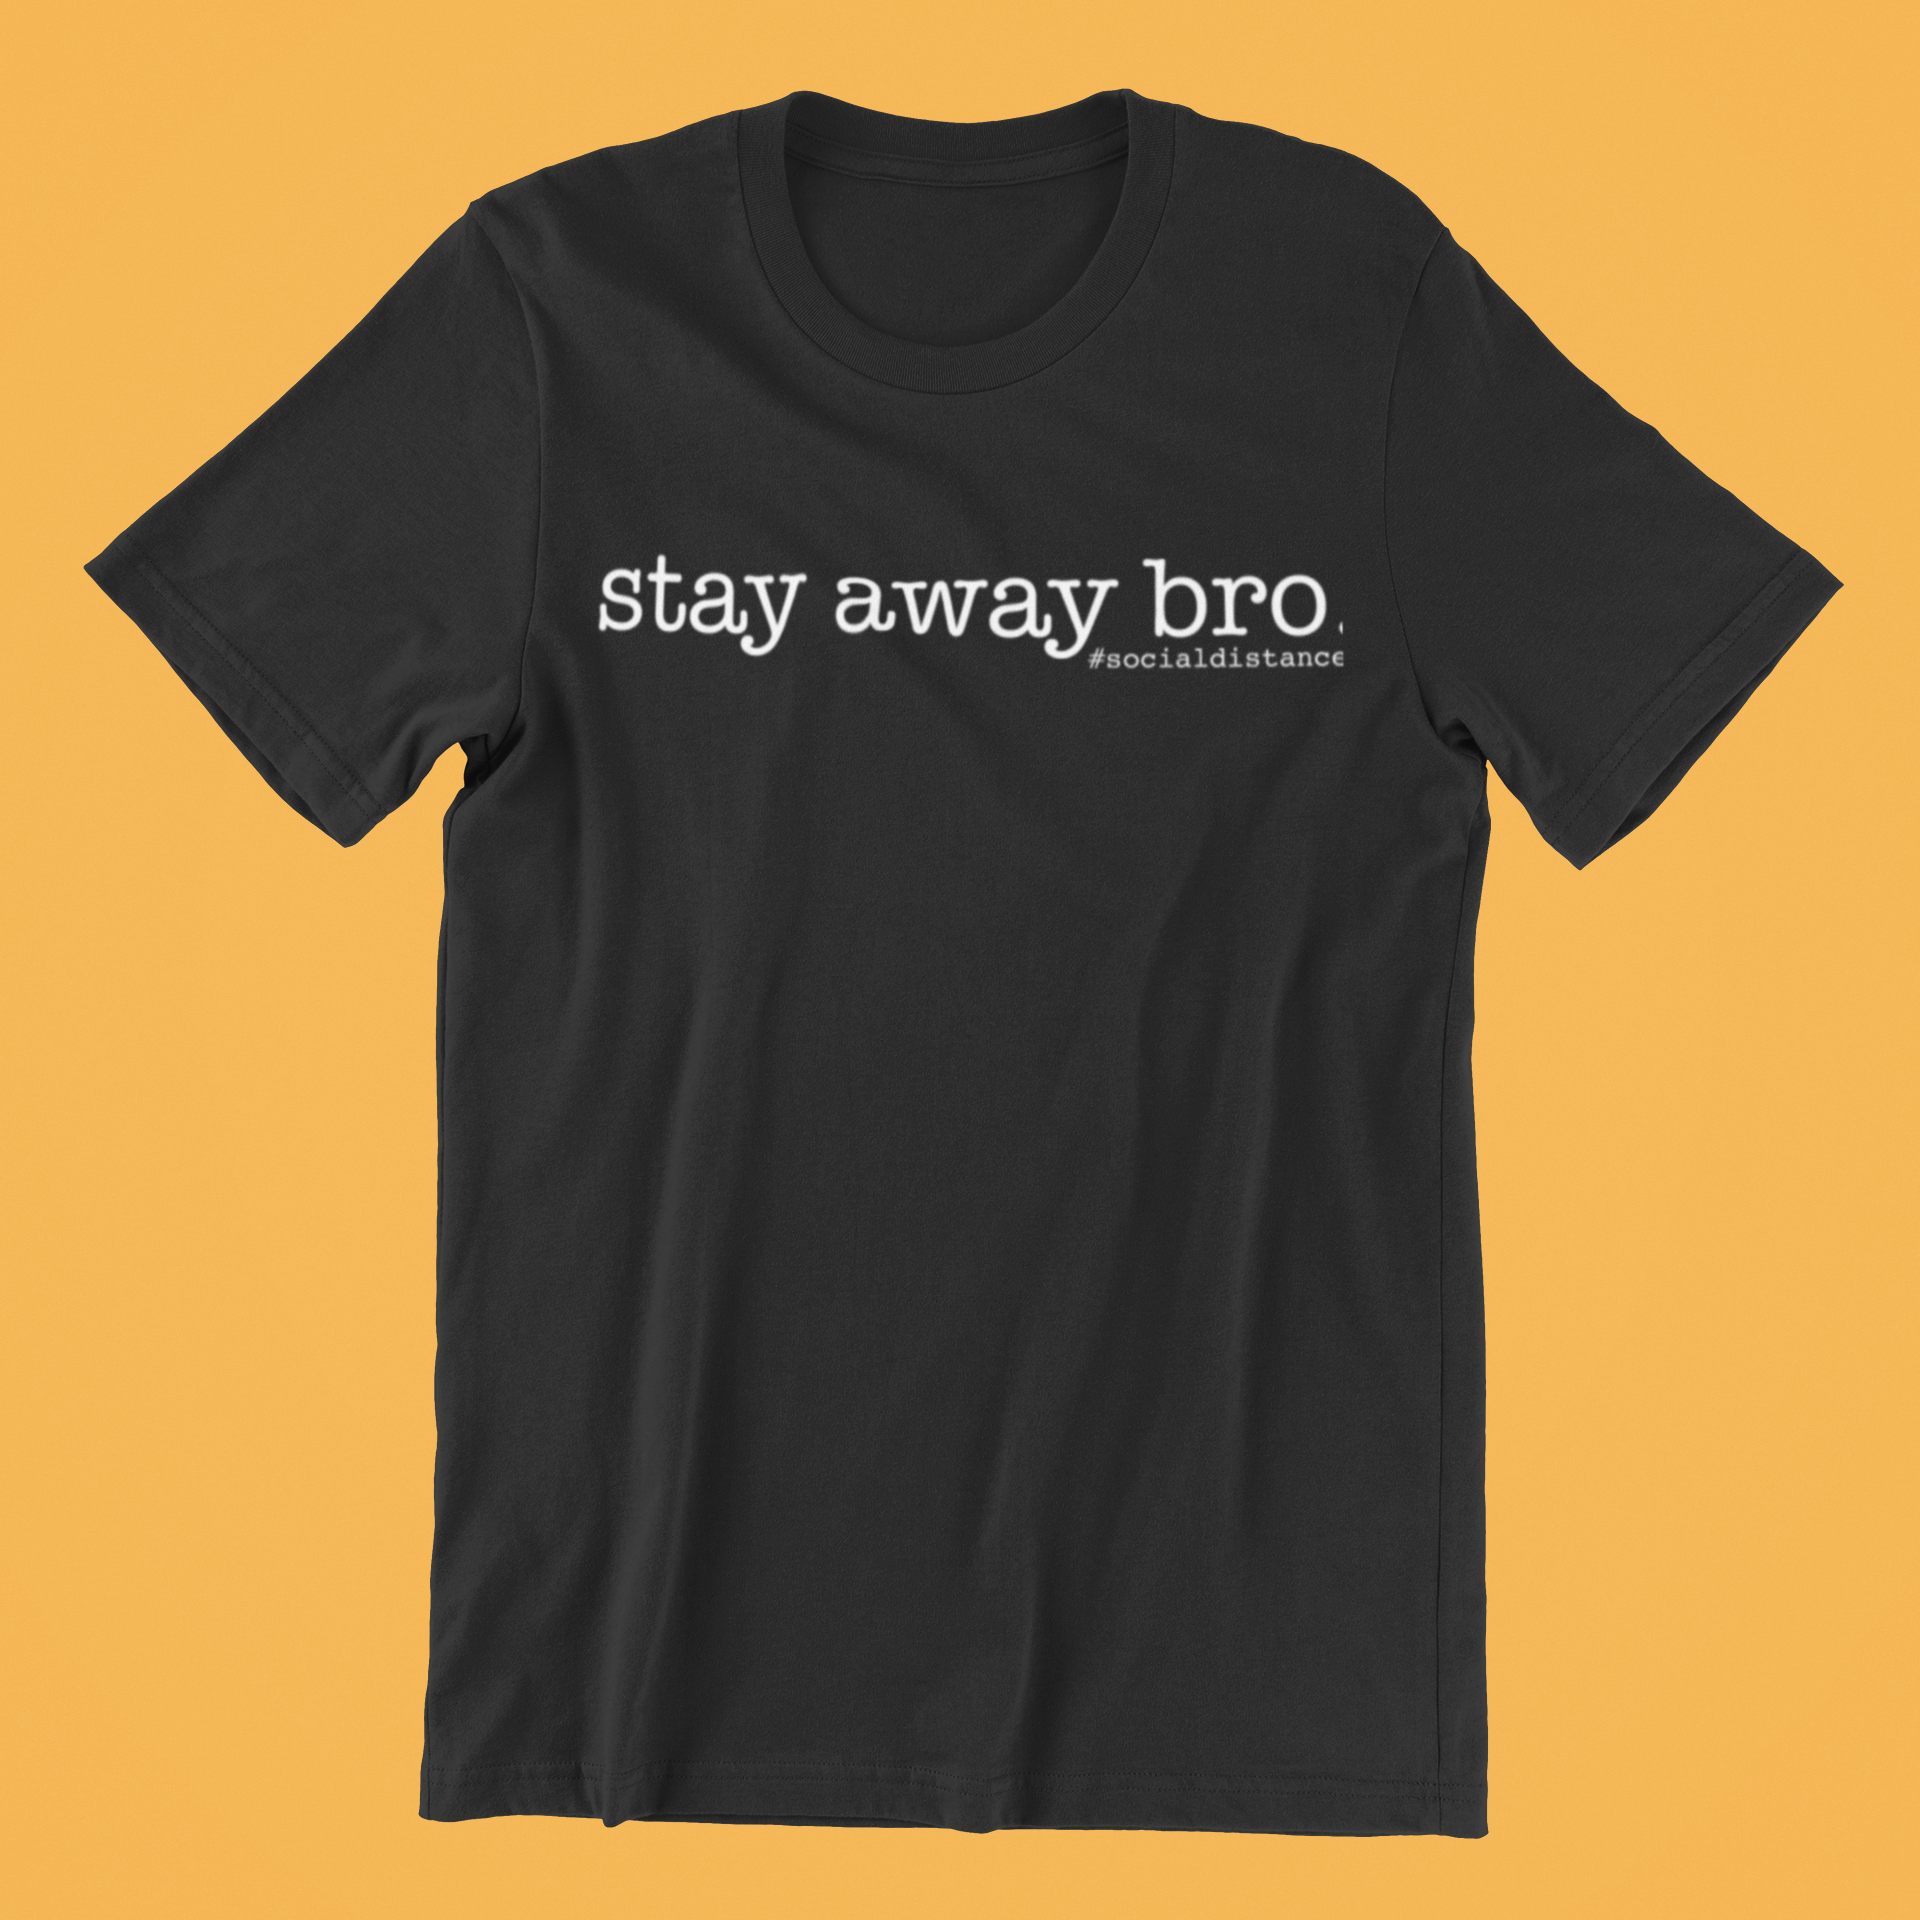 stay away bro - T shirt